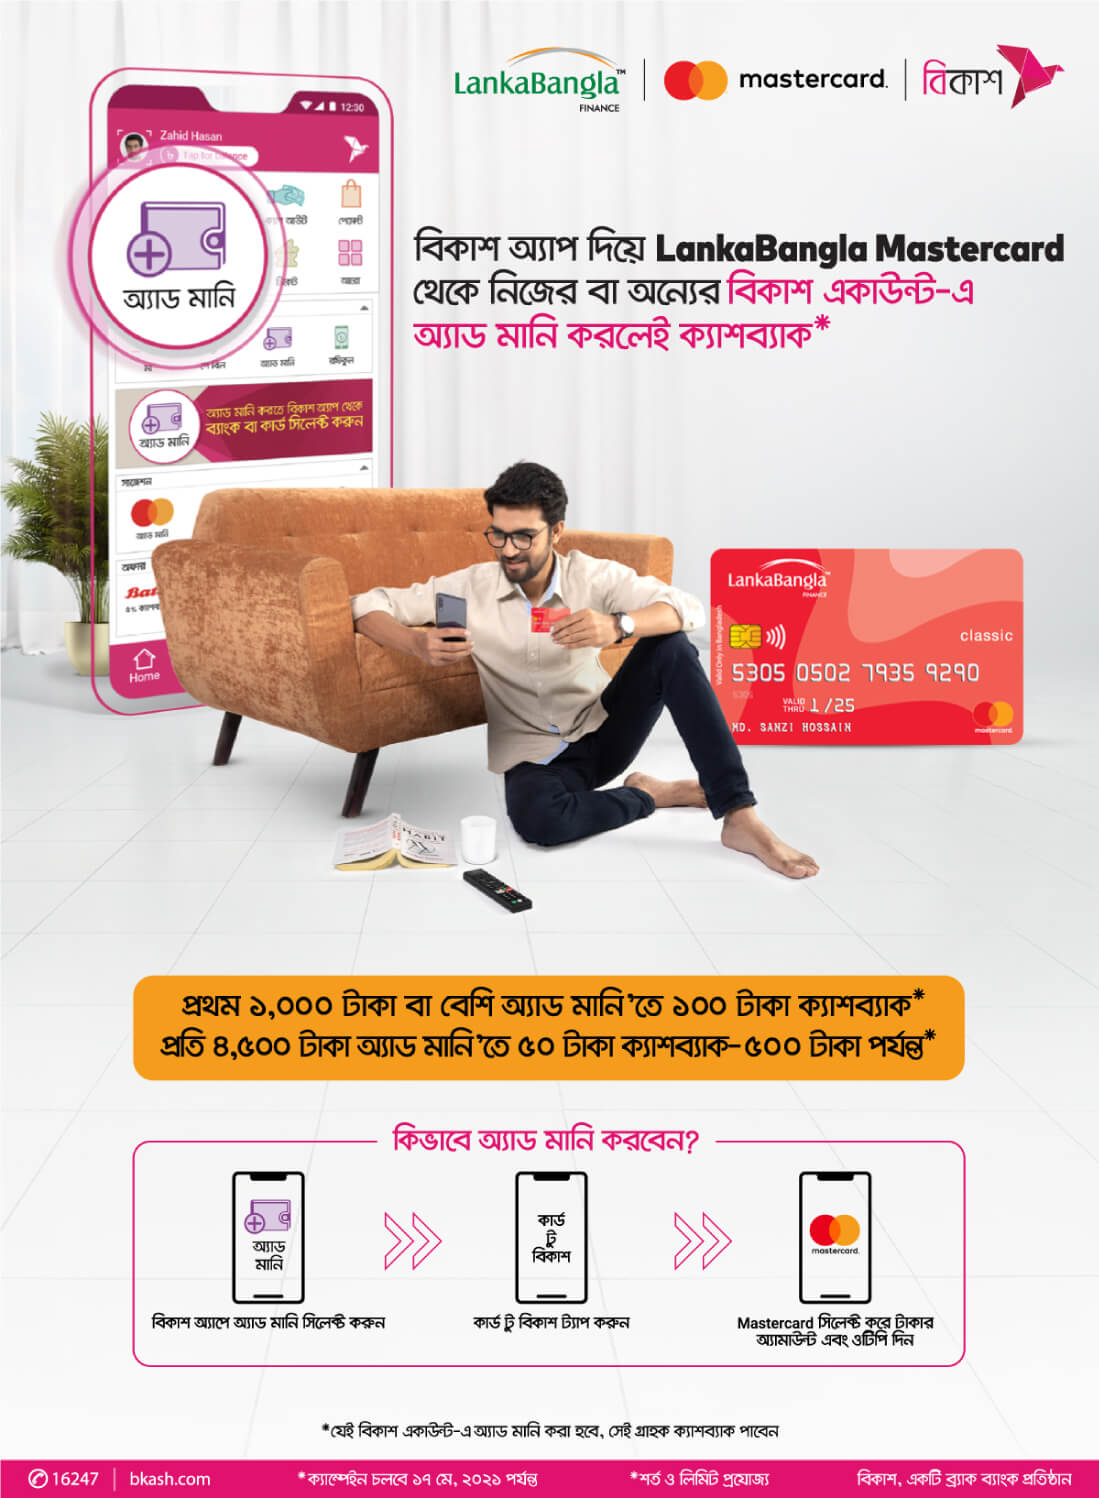 Instant Cashback Offers on Add Money Service from LankaBangla Mastercard to bKash